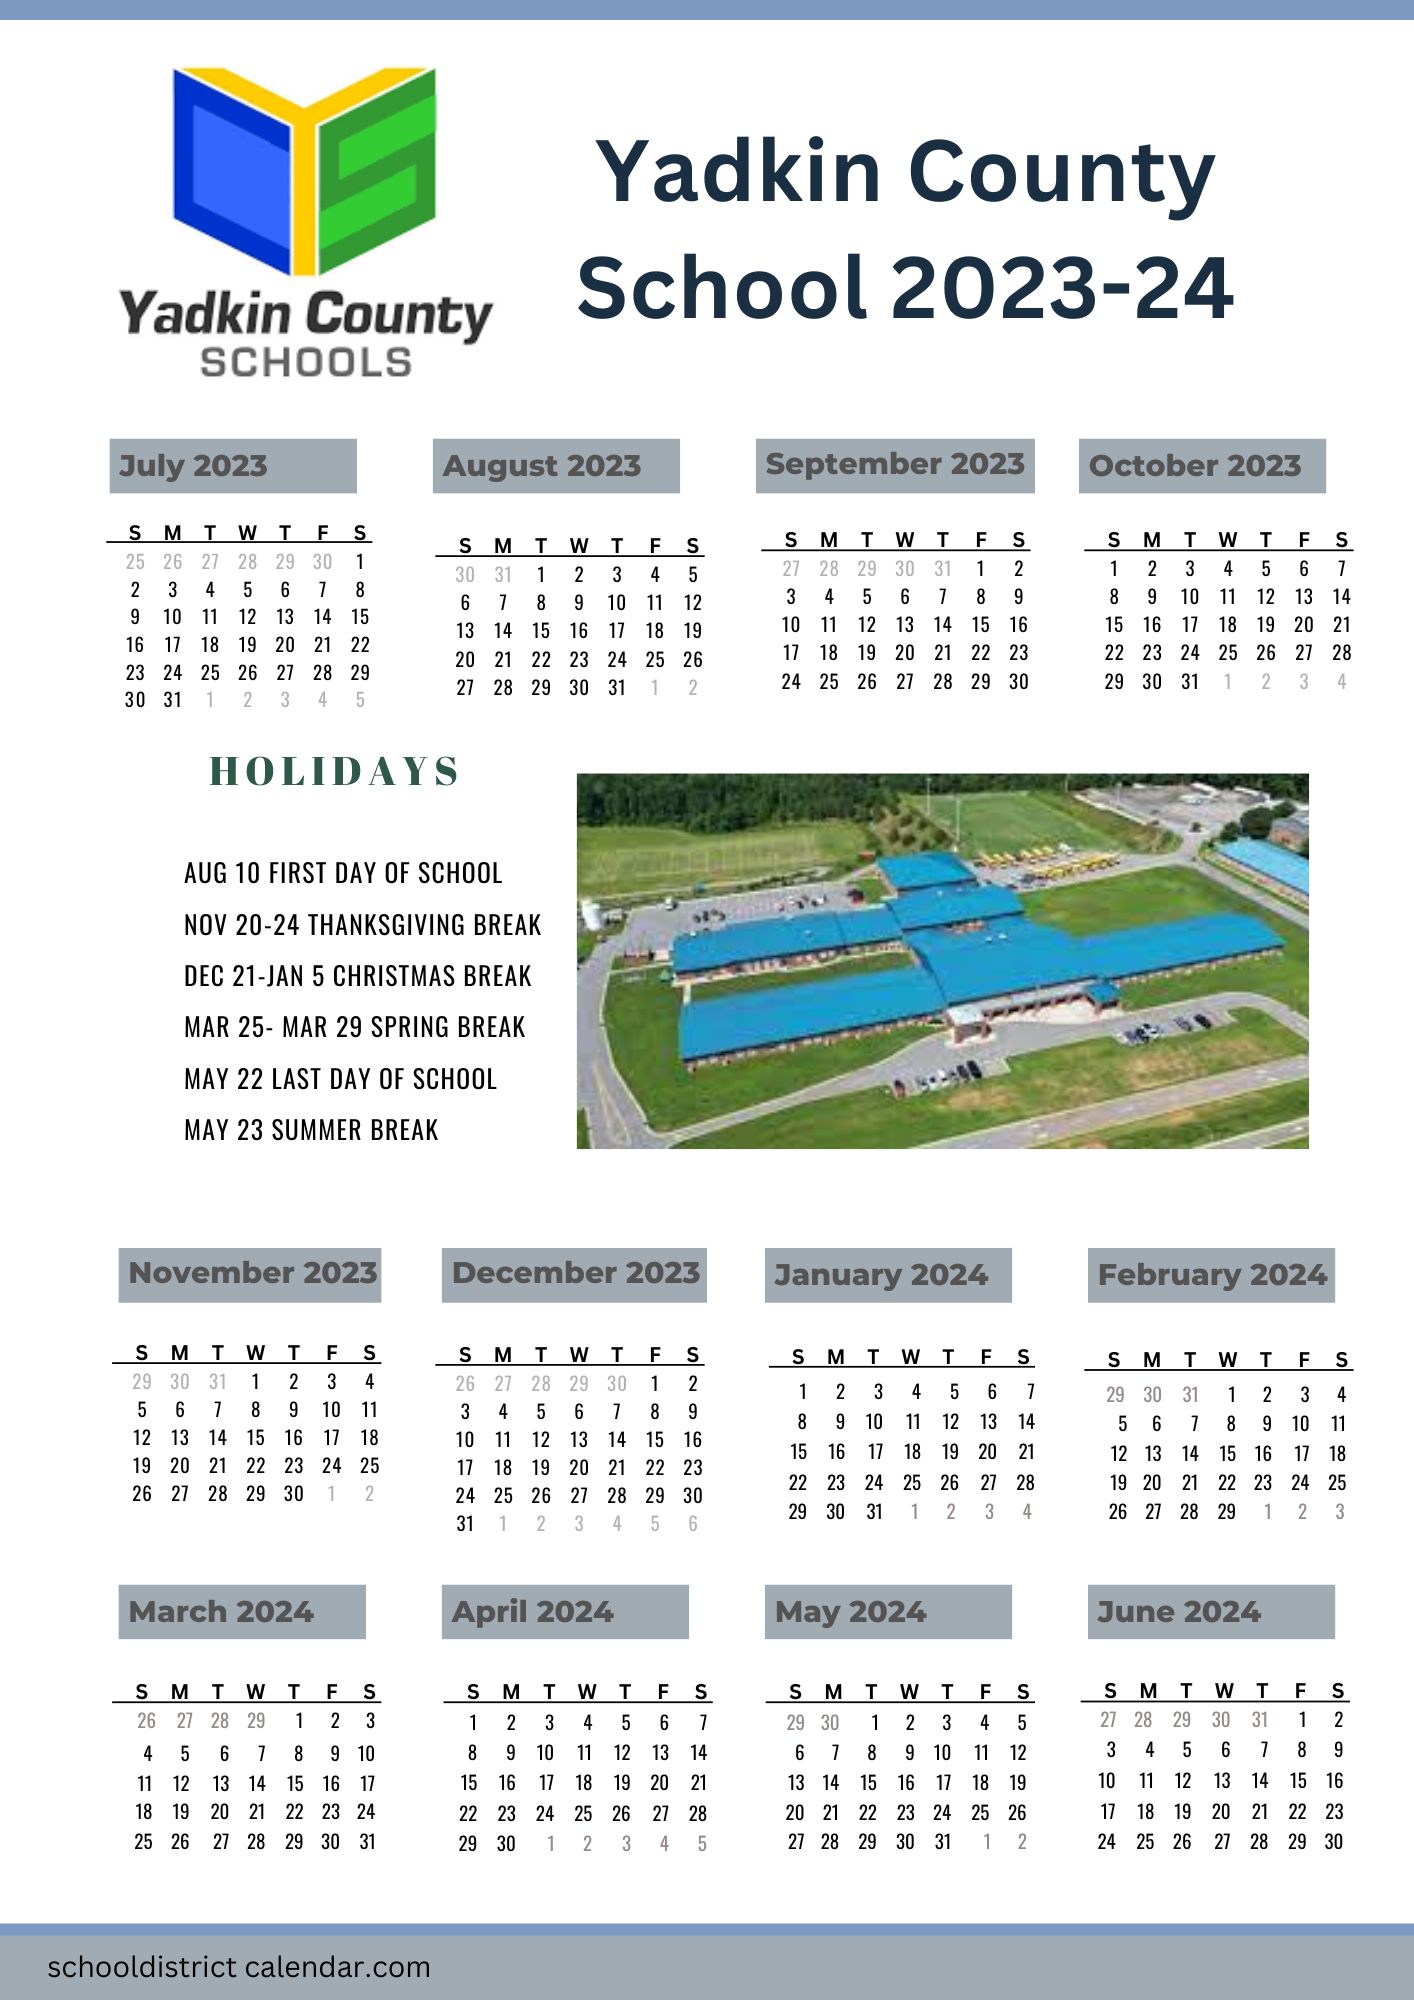 yadkin-county-schools-calendar-holidays-2023-2024